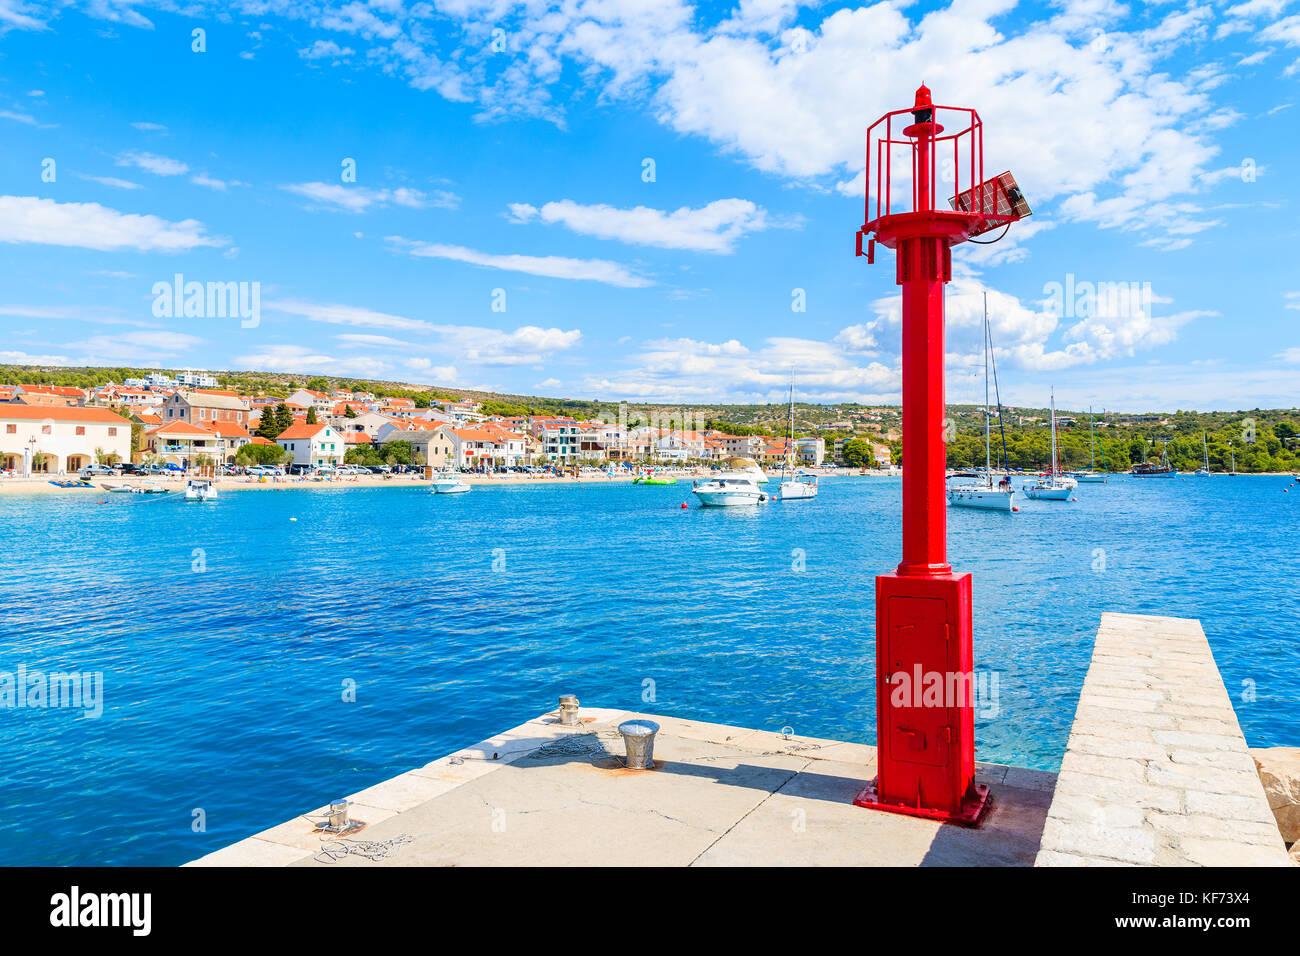 Pier and entrance to Primosten port, Dalmatia, Croatia Stock Photo